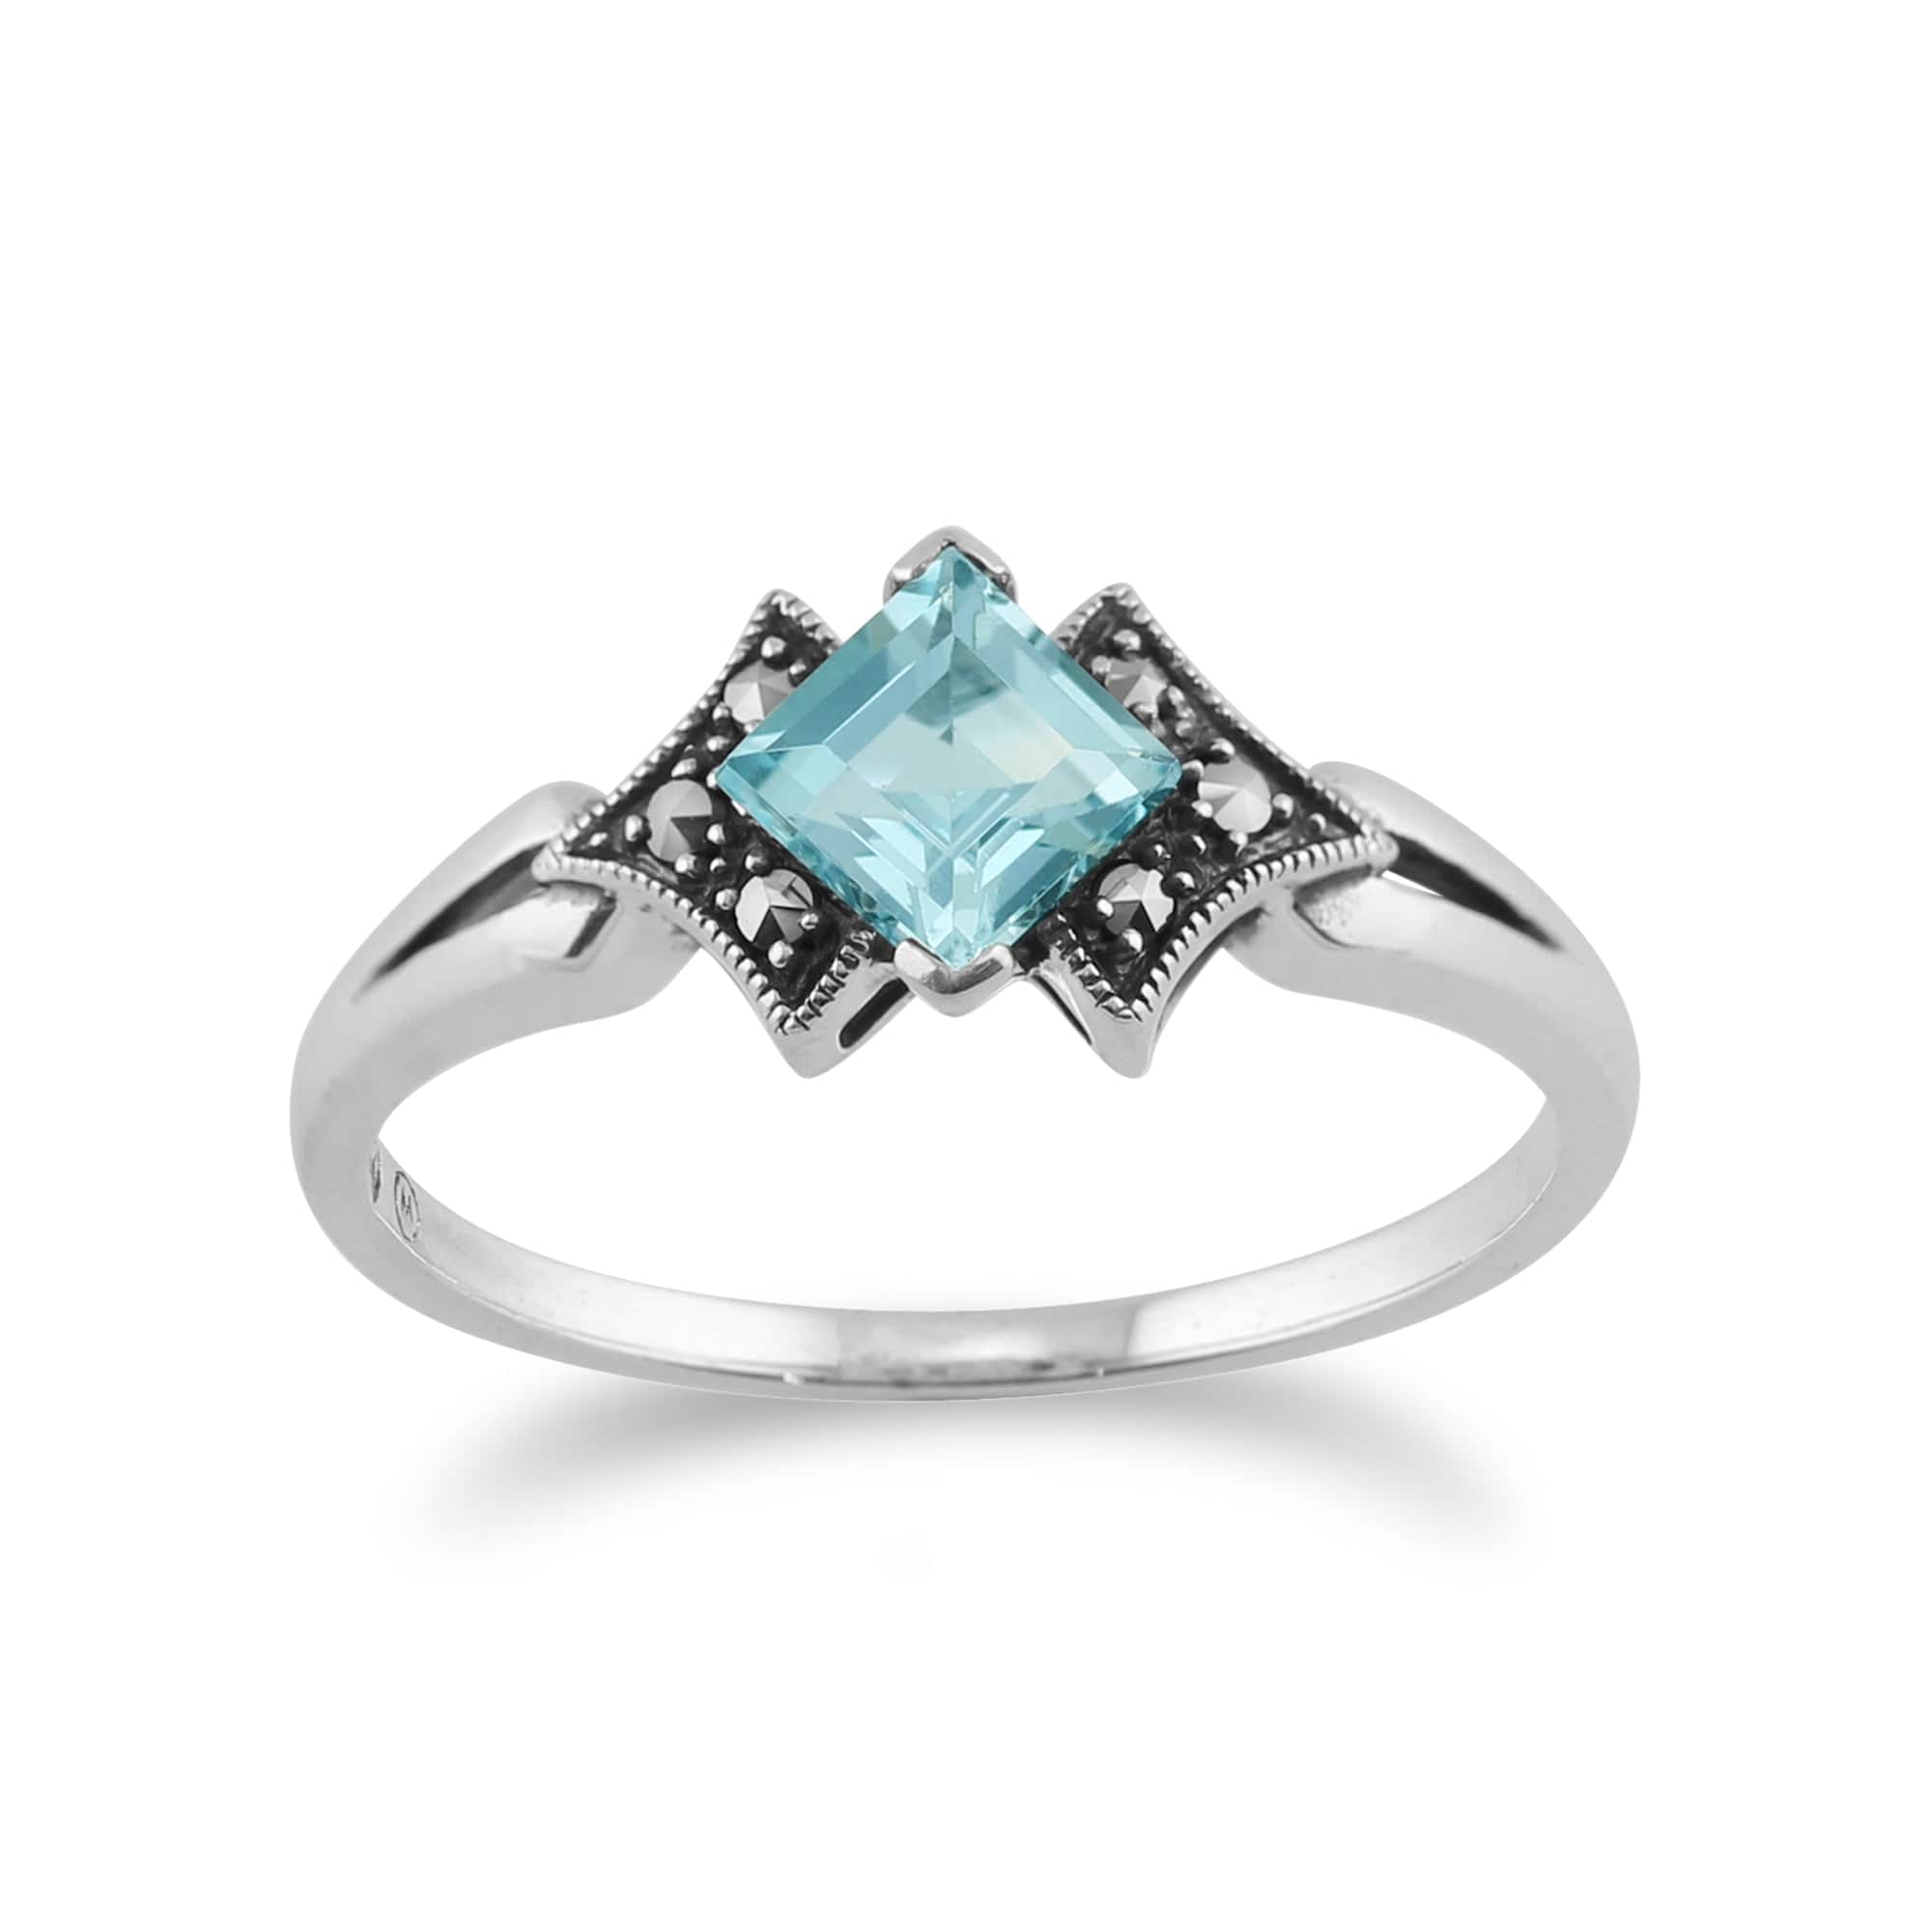 Art Deco Style Square Blue Topaz & Marcasite Ring in 925 Sterling Silver - Gemondo